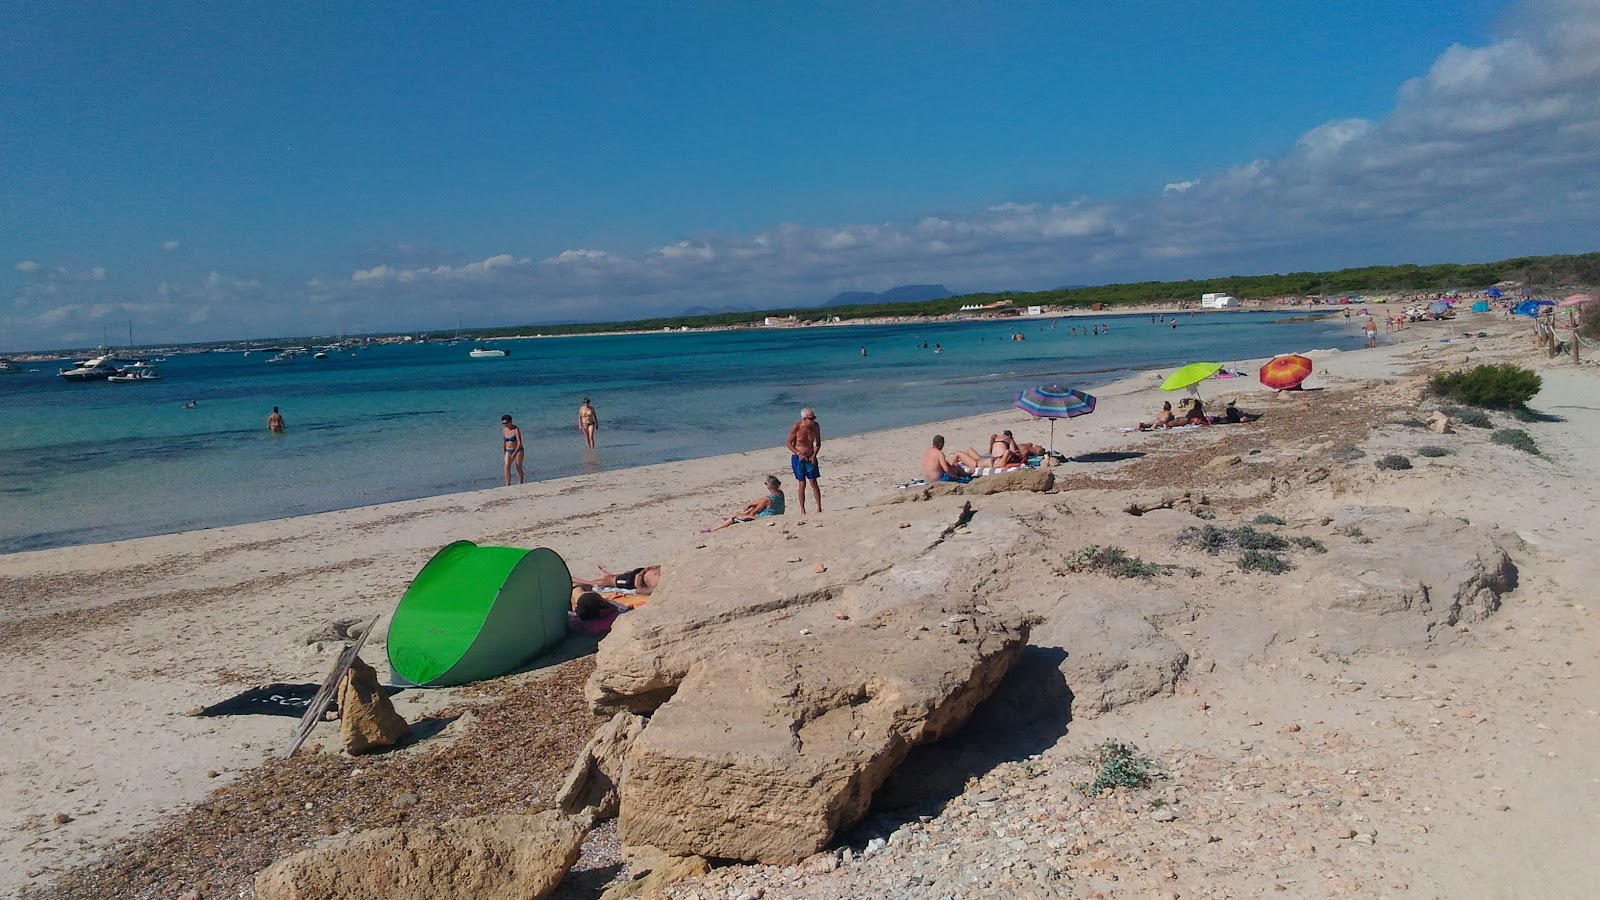 Foto di Platja des Peregons con una superficie del sabbia fine e luminosa